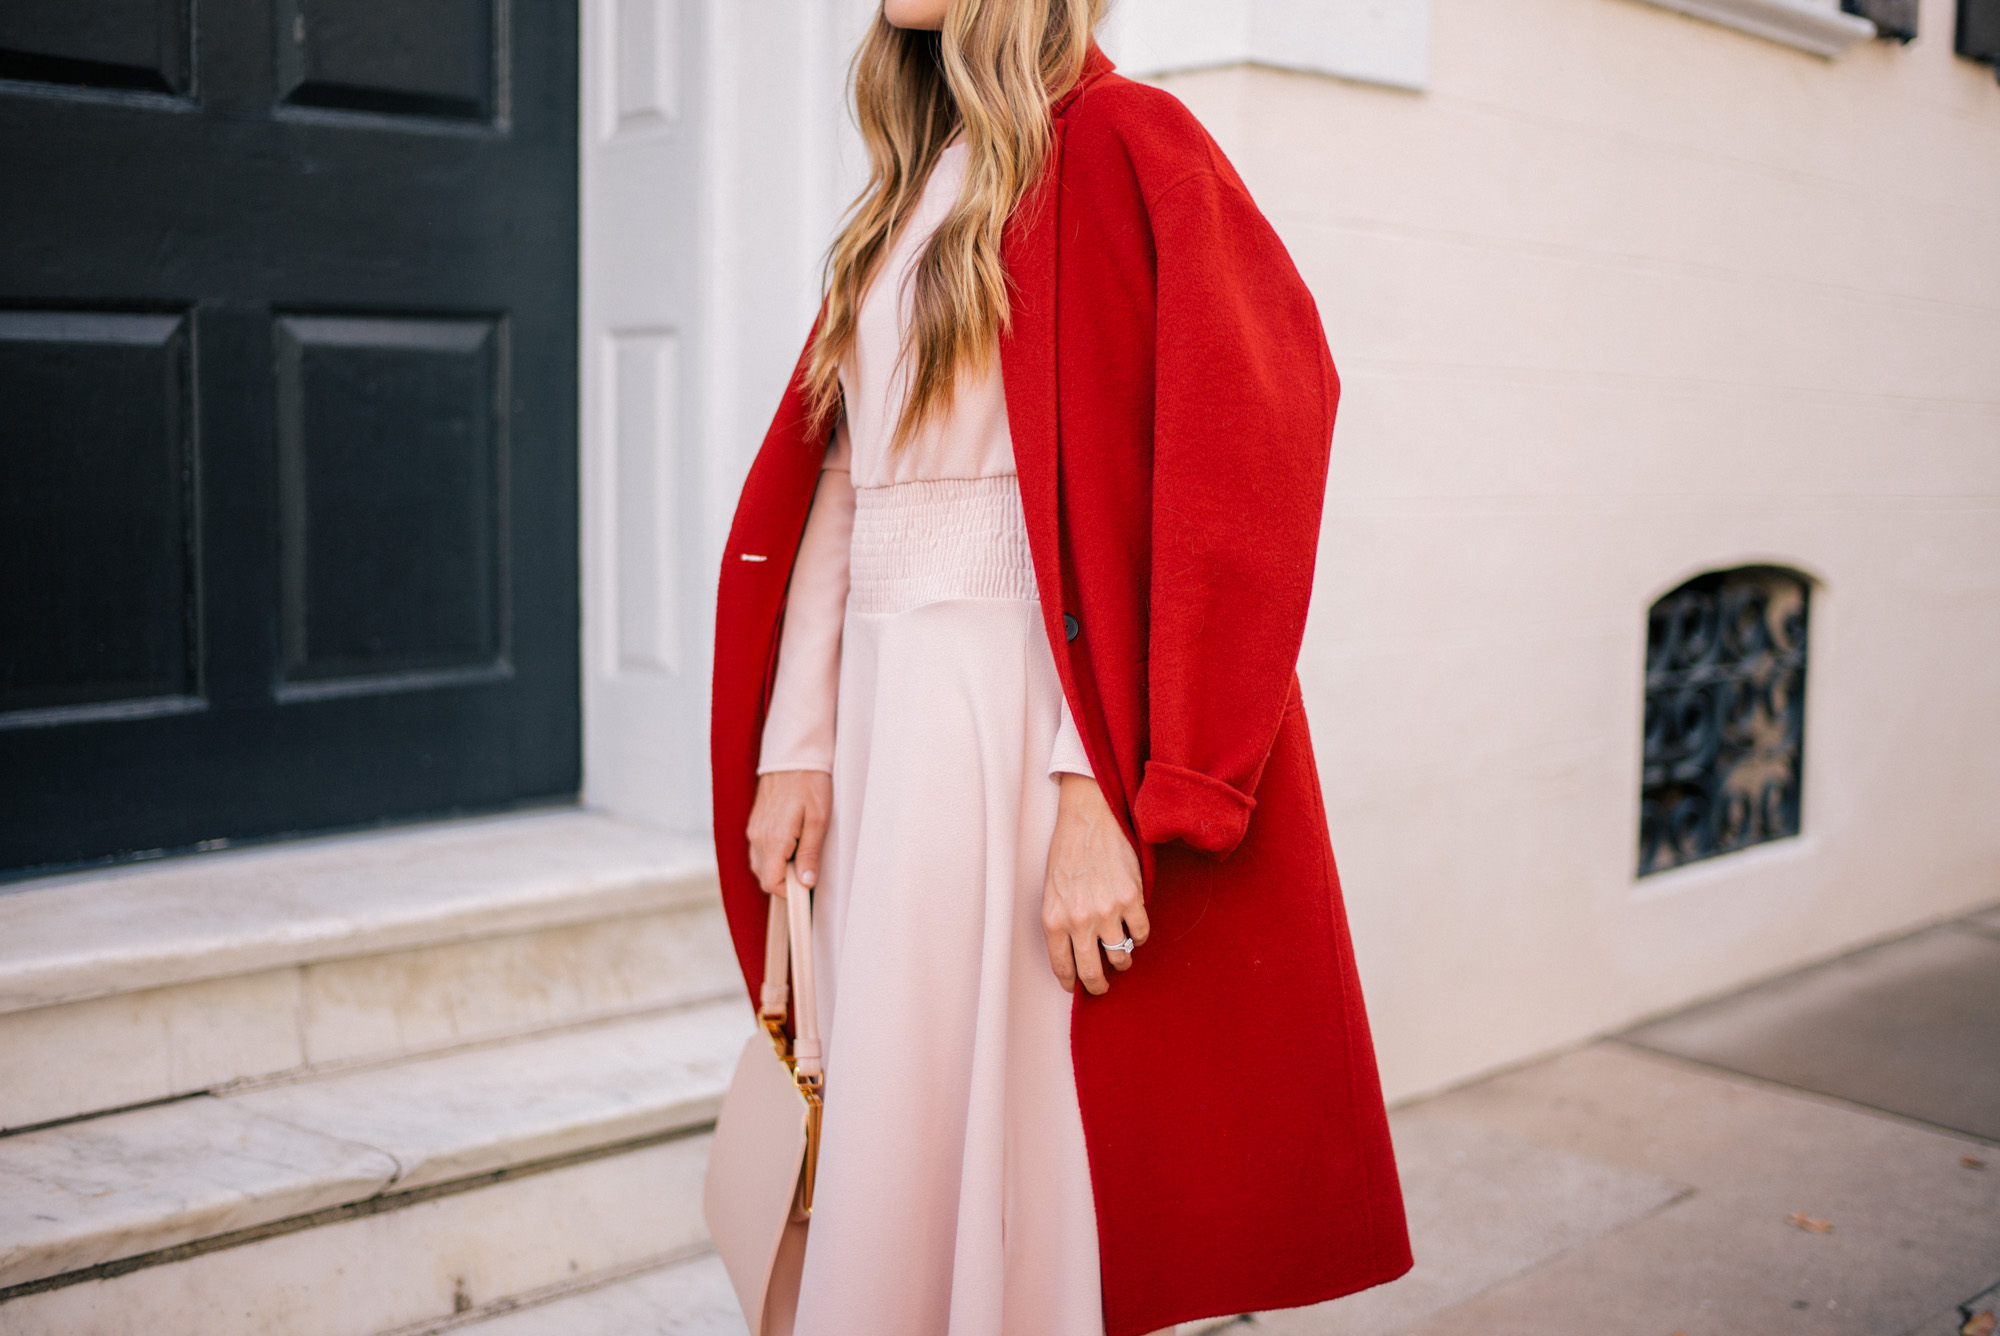 gmg-pink-dress-red-coat-1009542